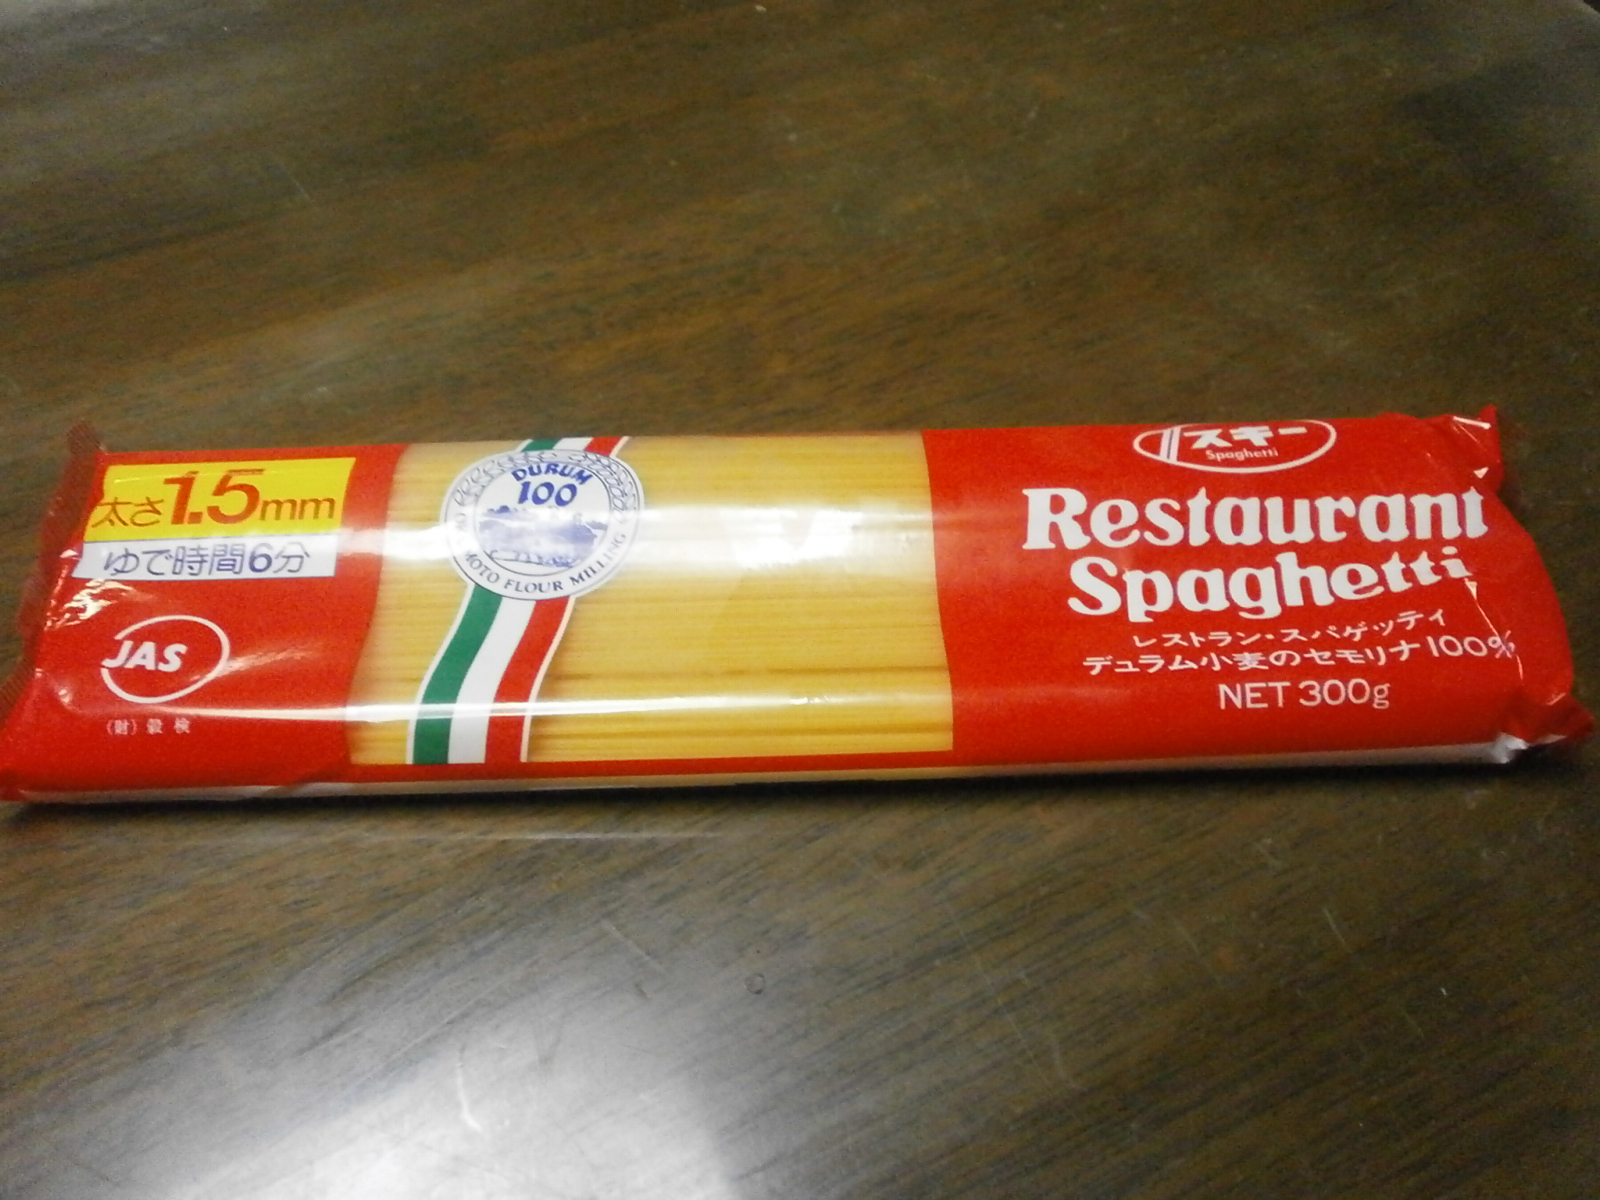 Restaurant Spaghetti (1.5 mm)